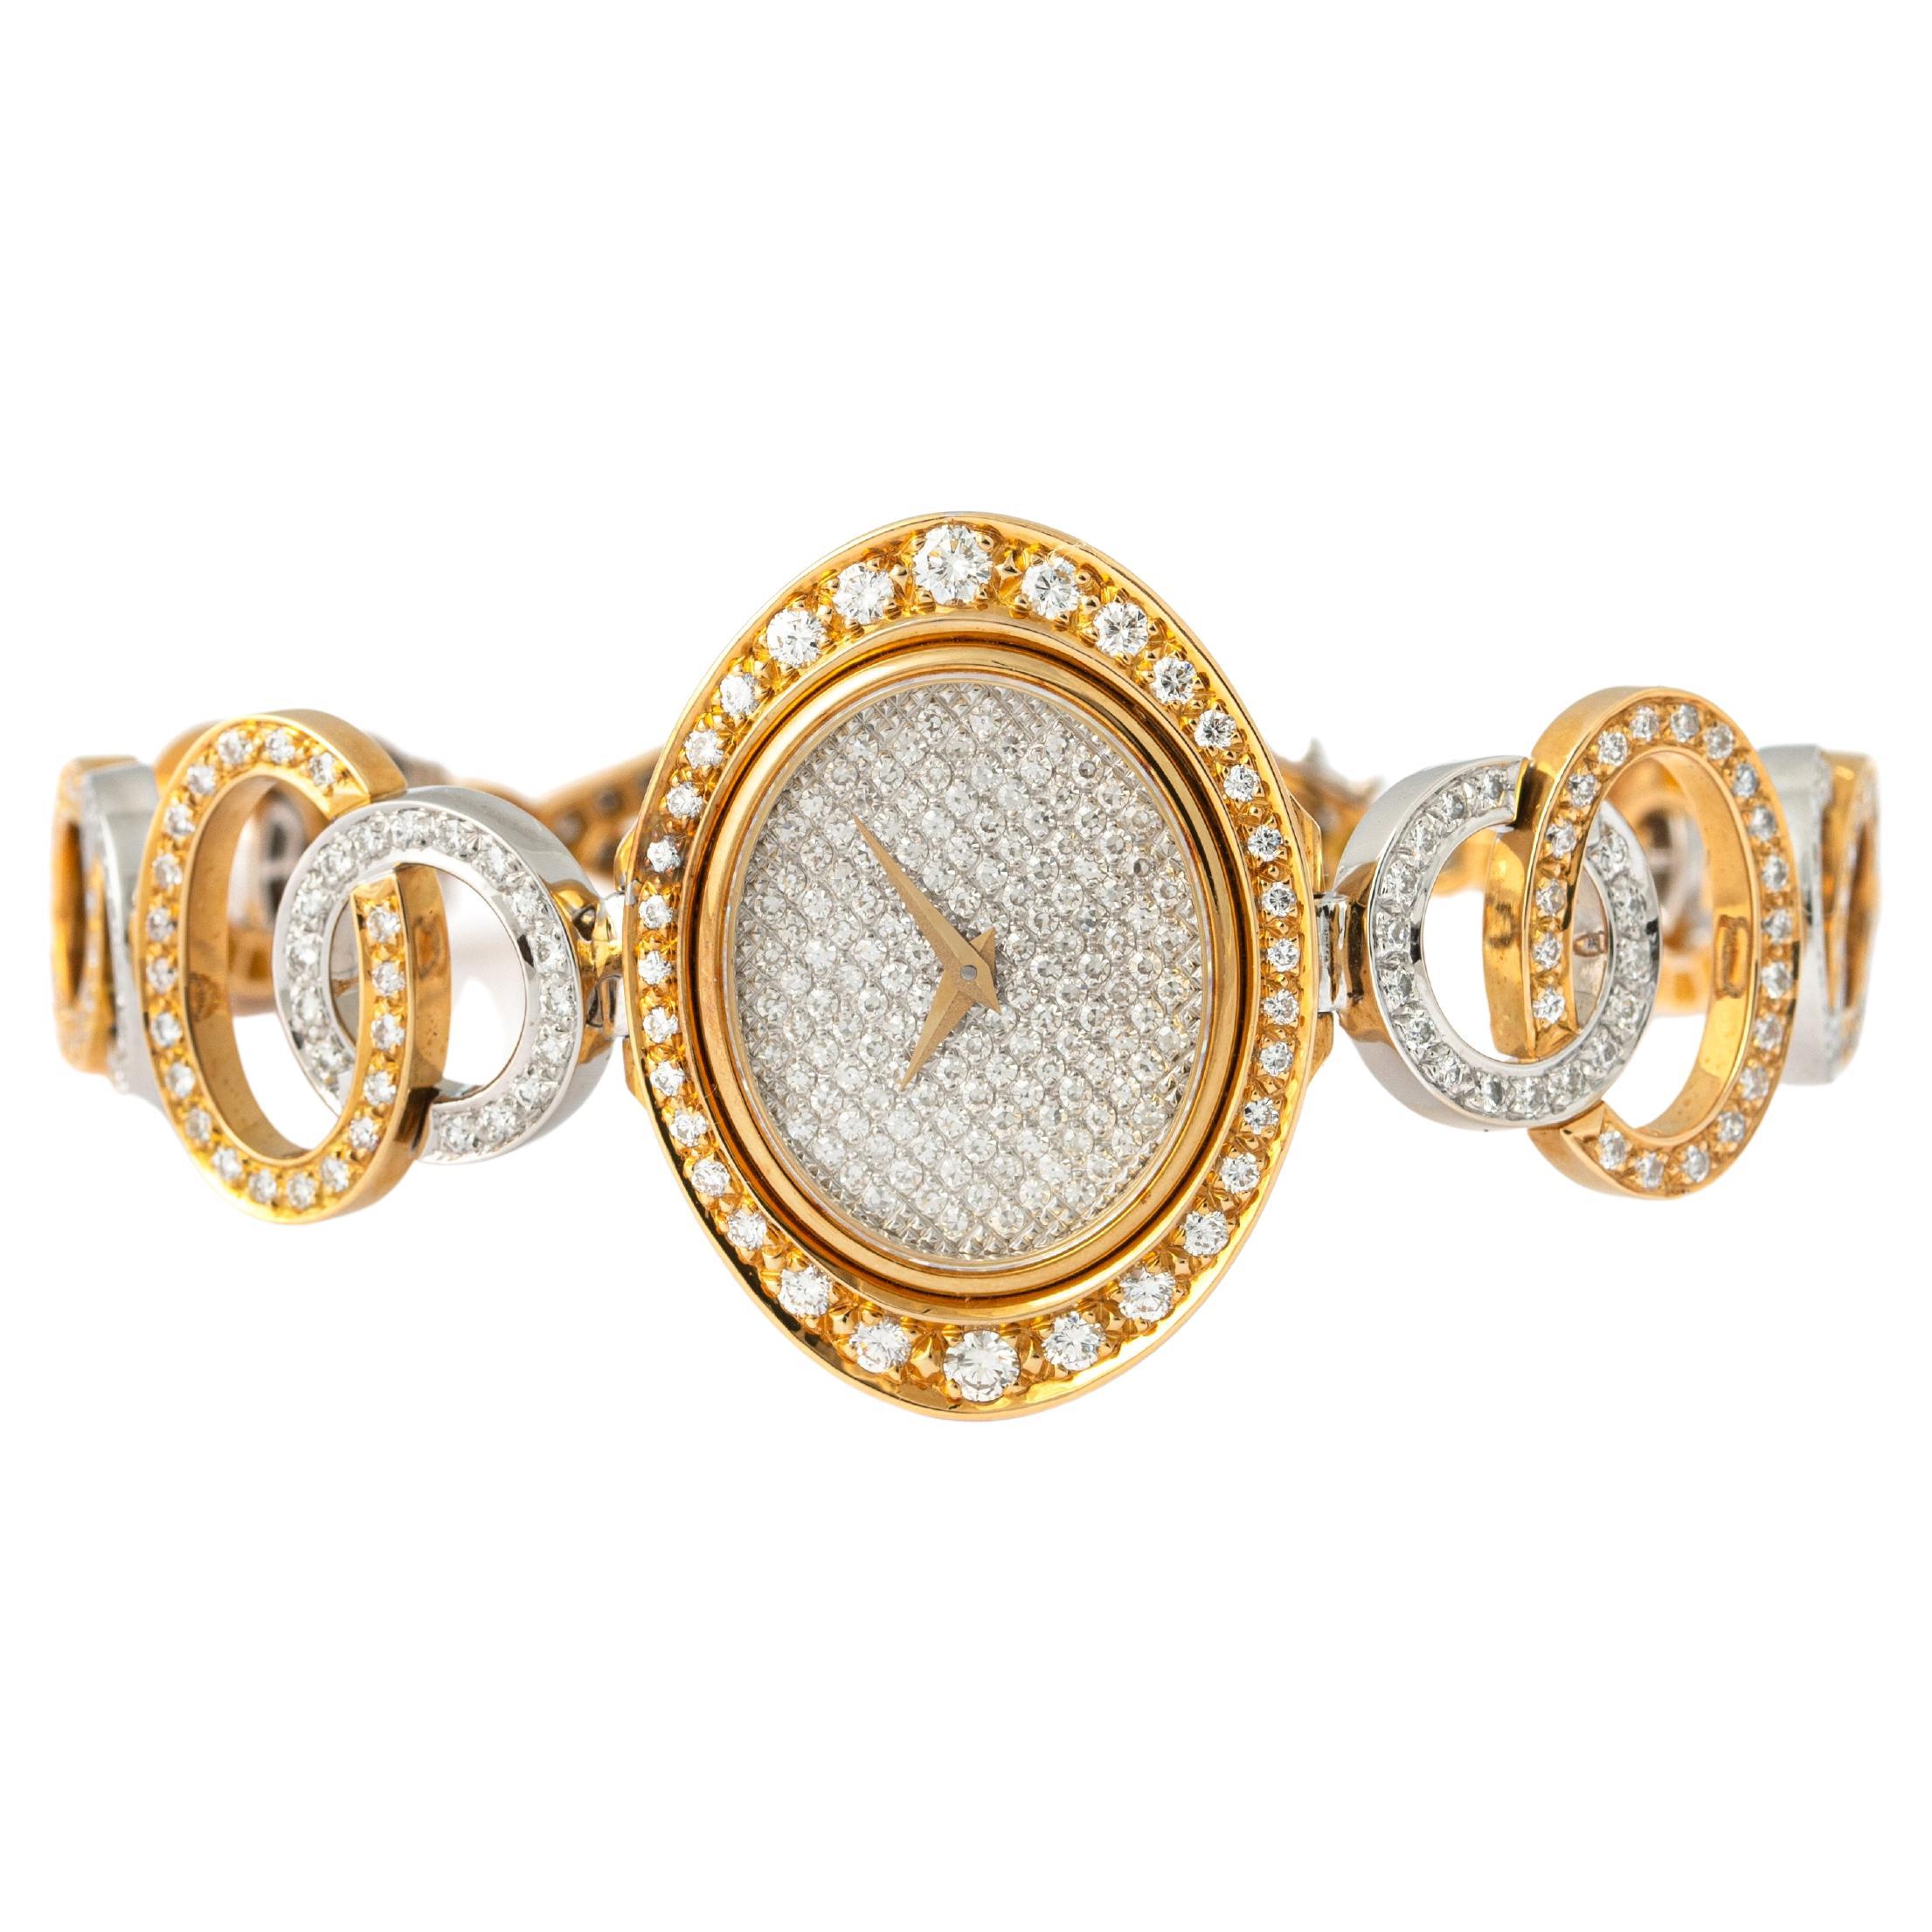 Julia-Plana and Simon Shlegel Diamond, yellow and white gold 18K wristwatch.
The mark 